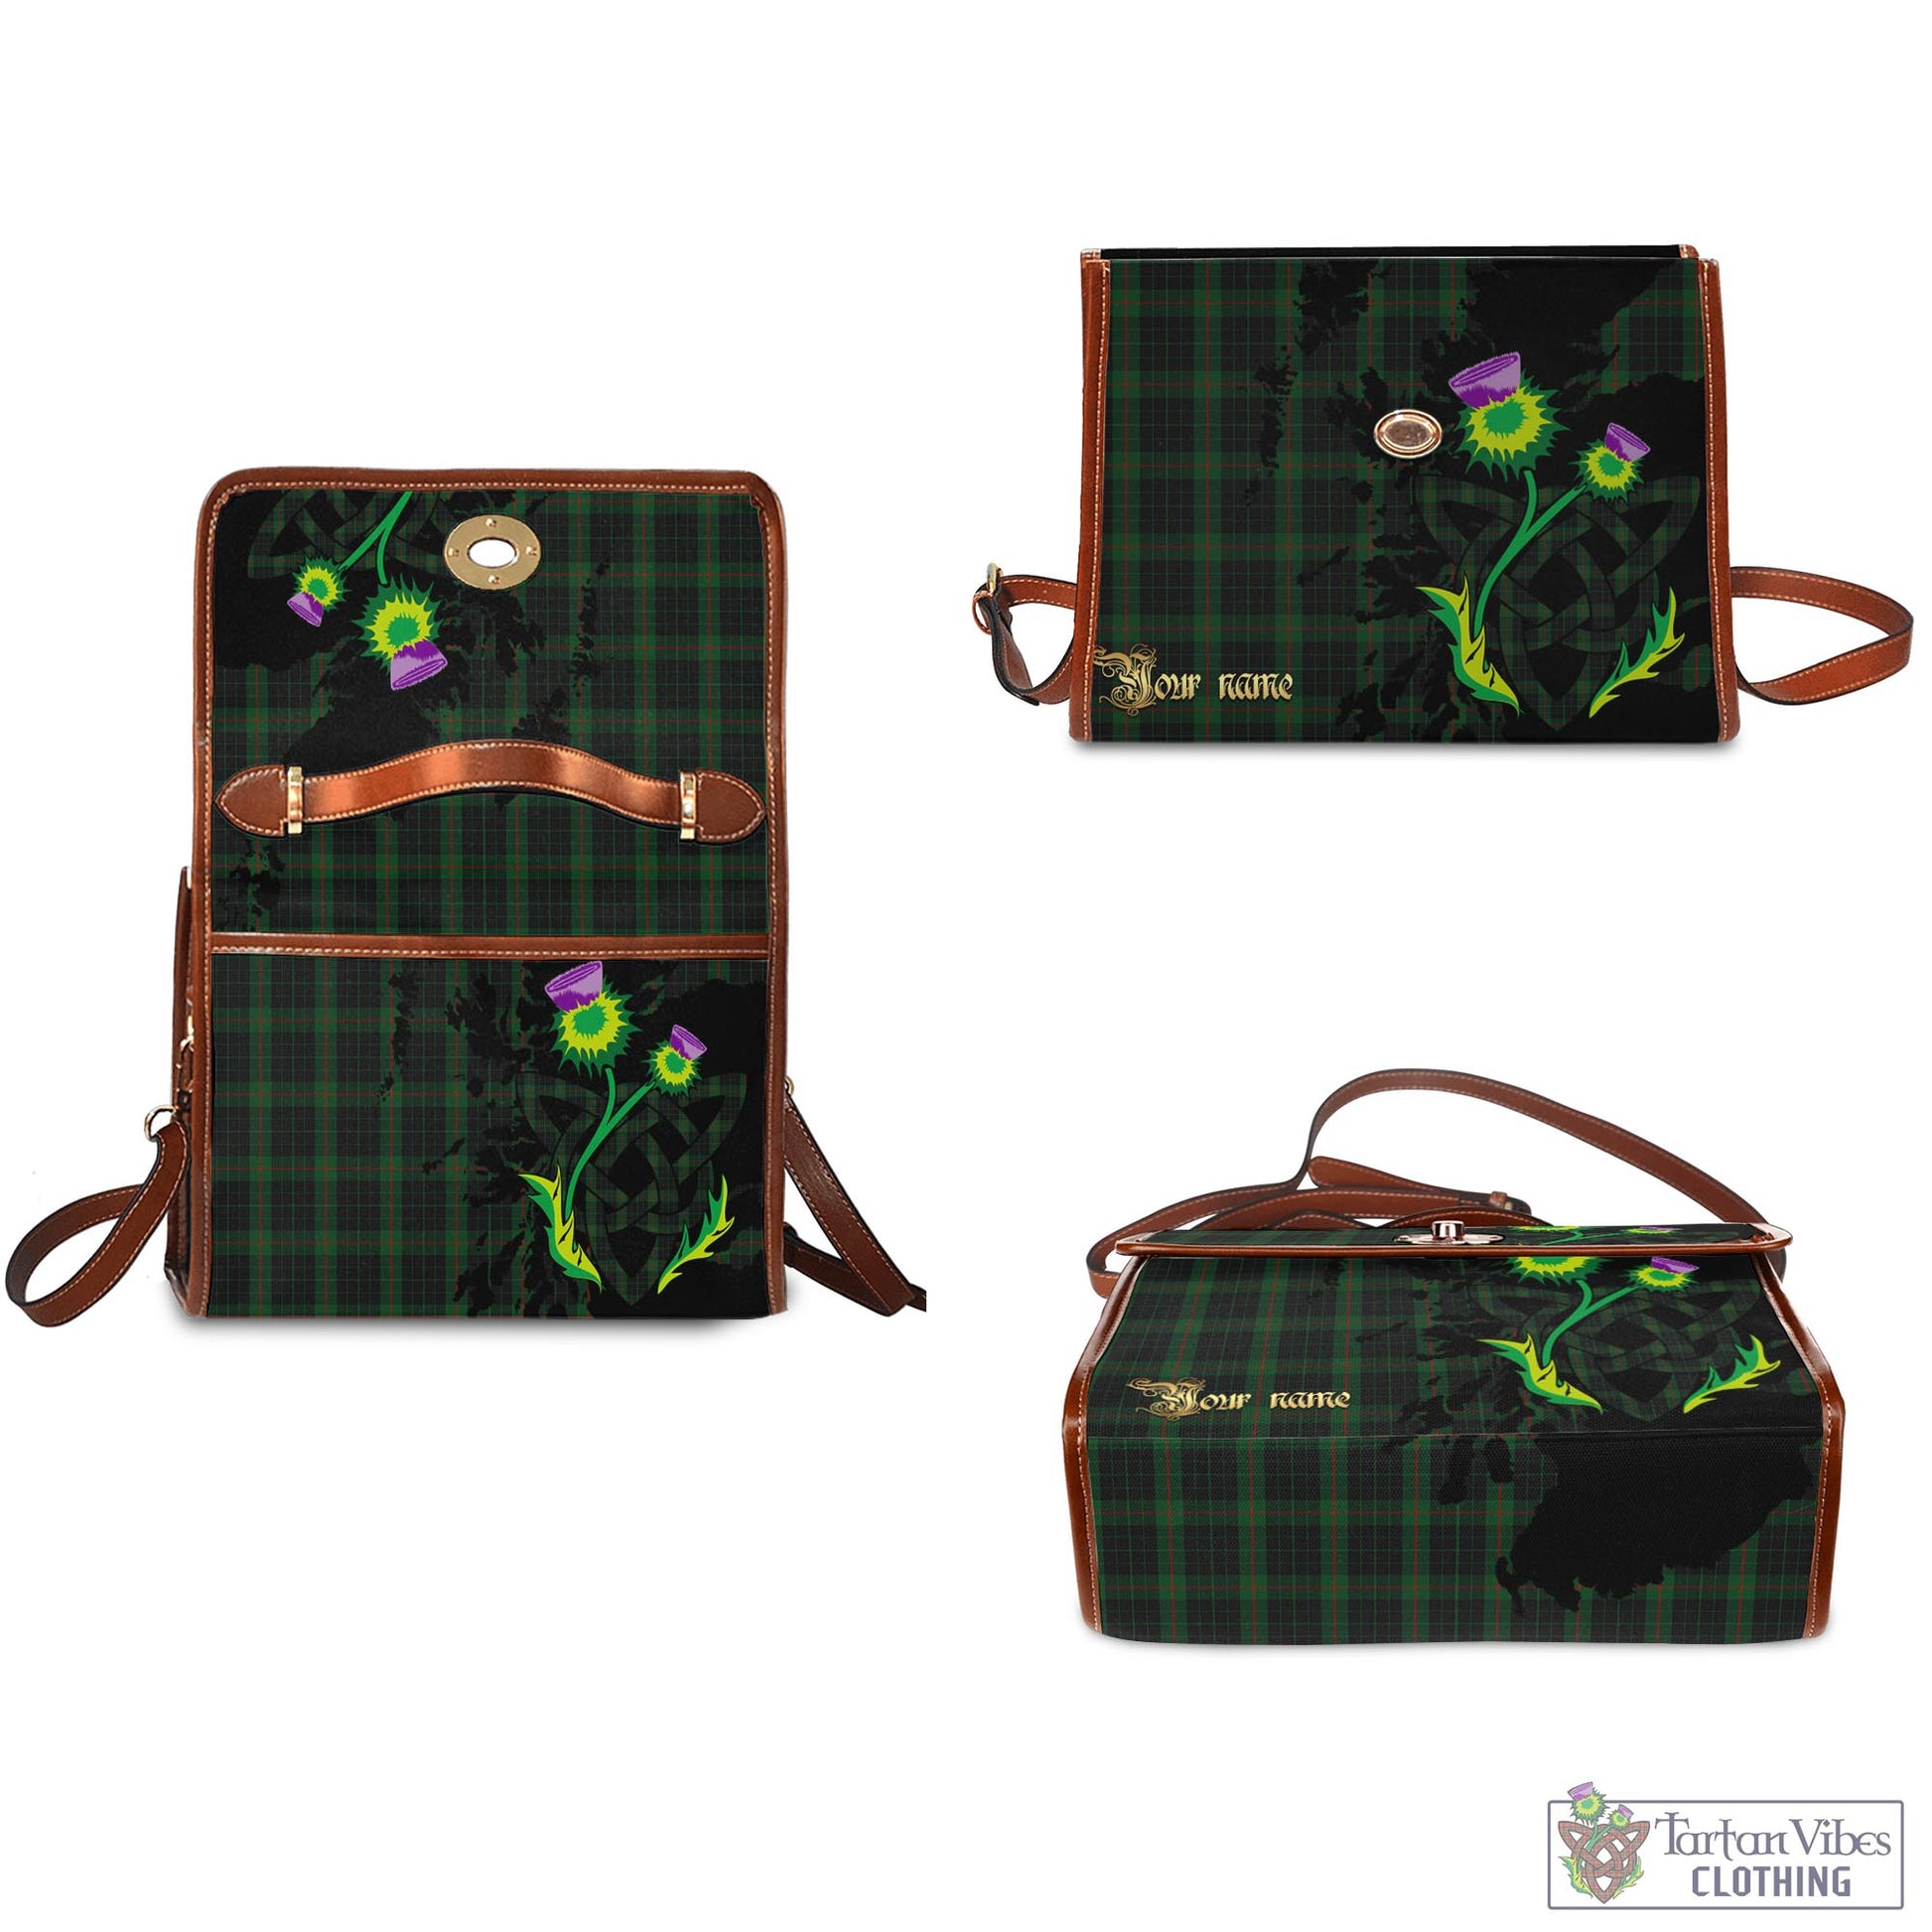 Tartan Vibes Clothing Gunn Logan Tartan Waterproof Canvas Bag with Scotland Map and Thistle Celtic Accents